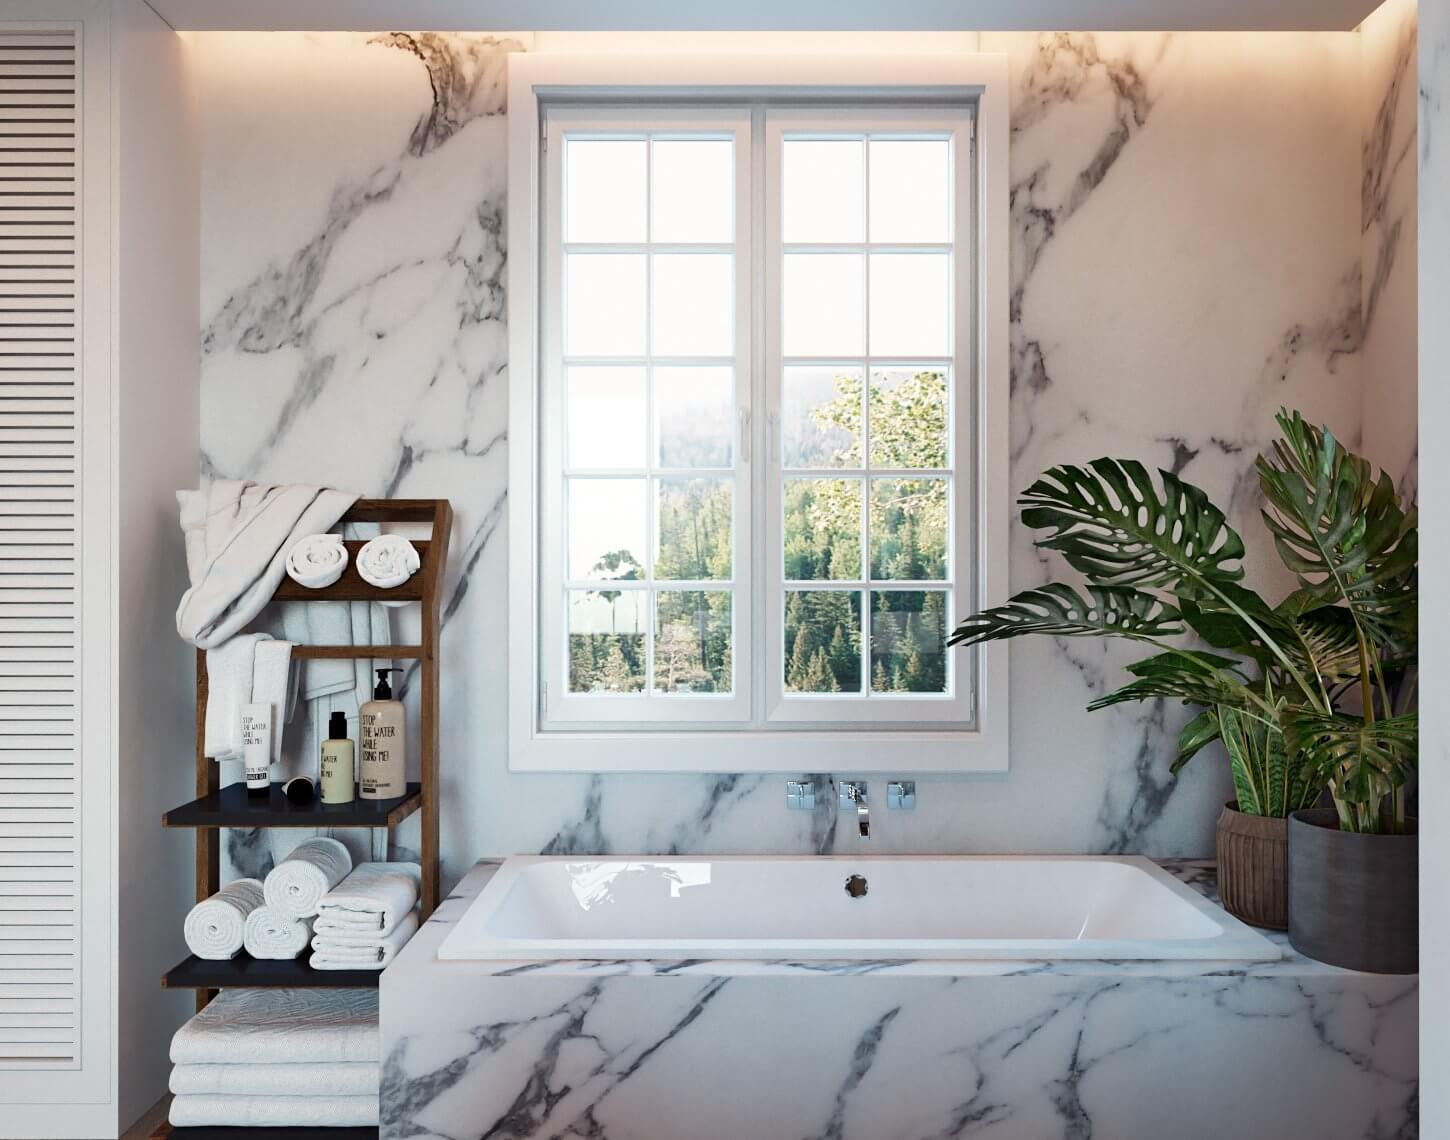 The Villa in Italy bathroom bathtub towels - cgi visualization